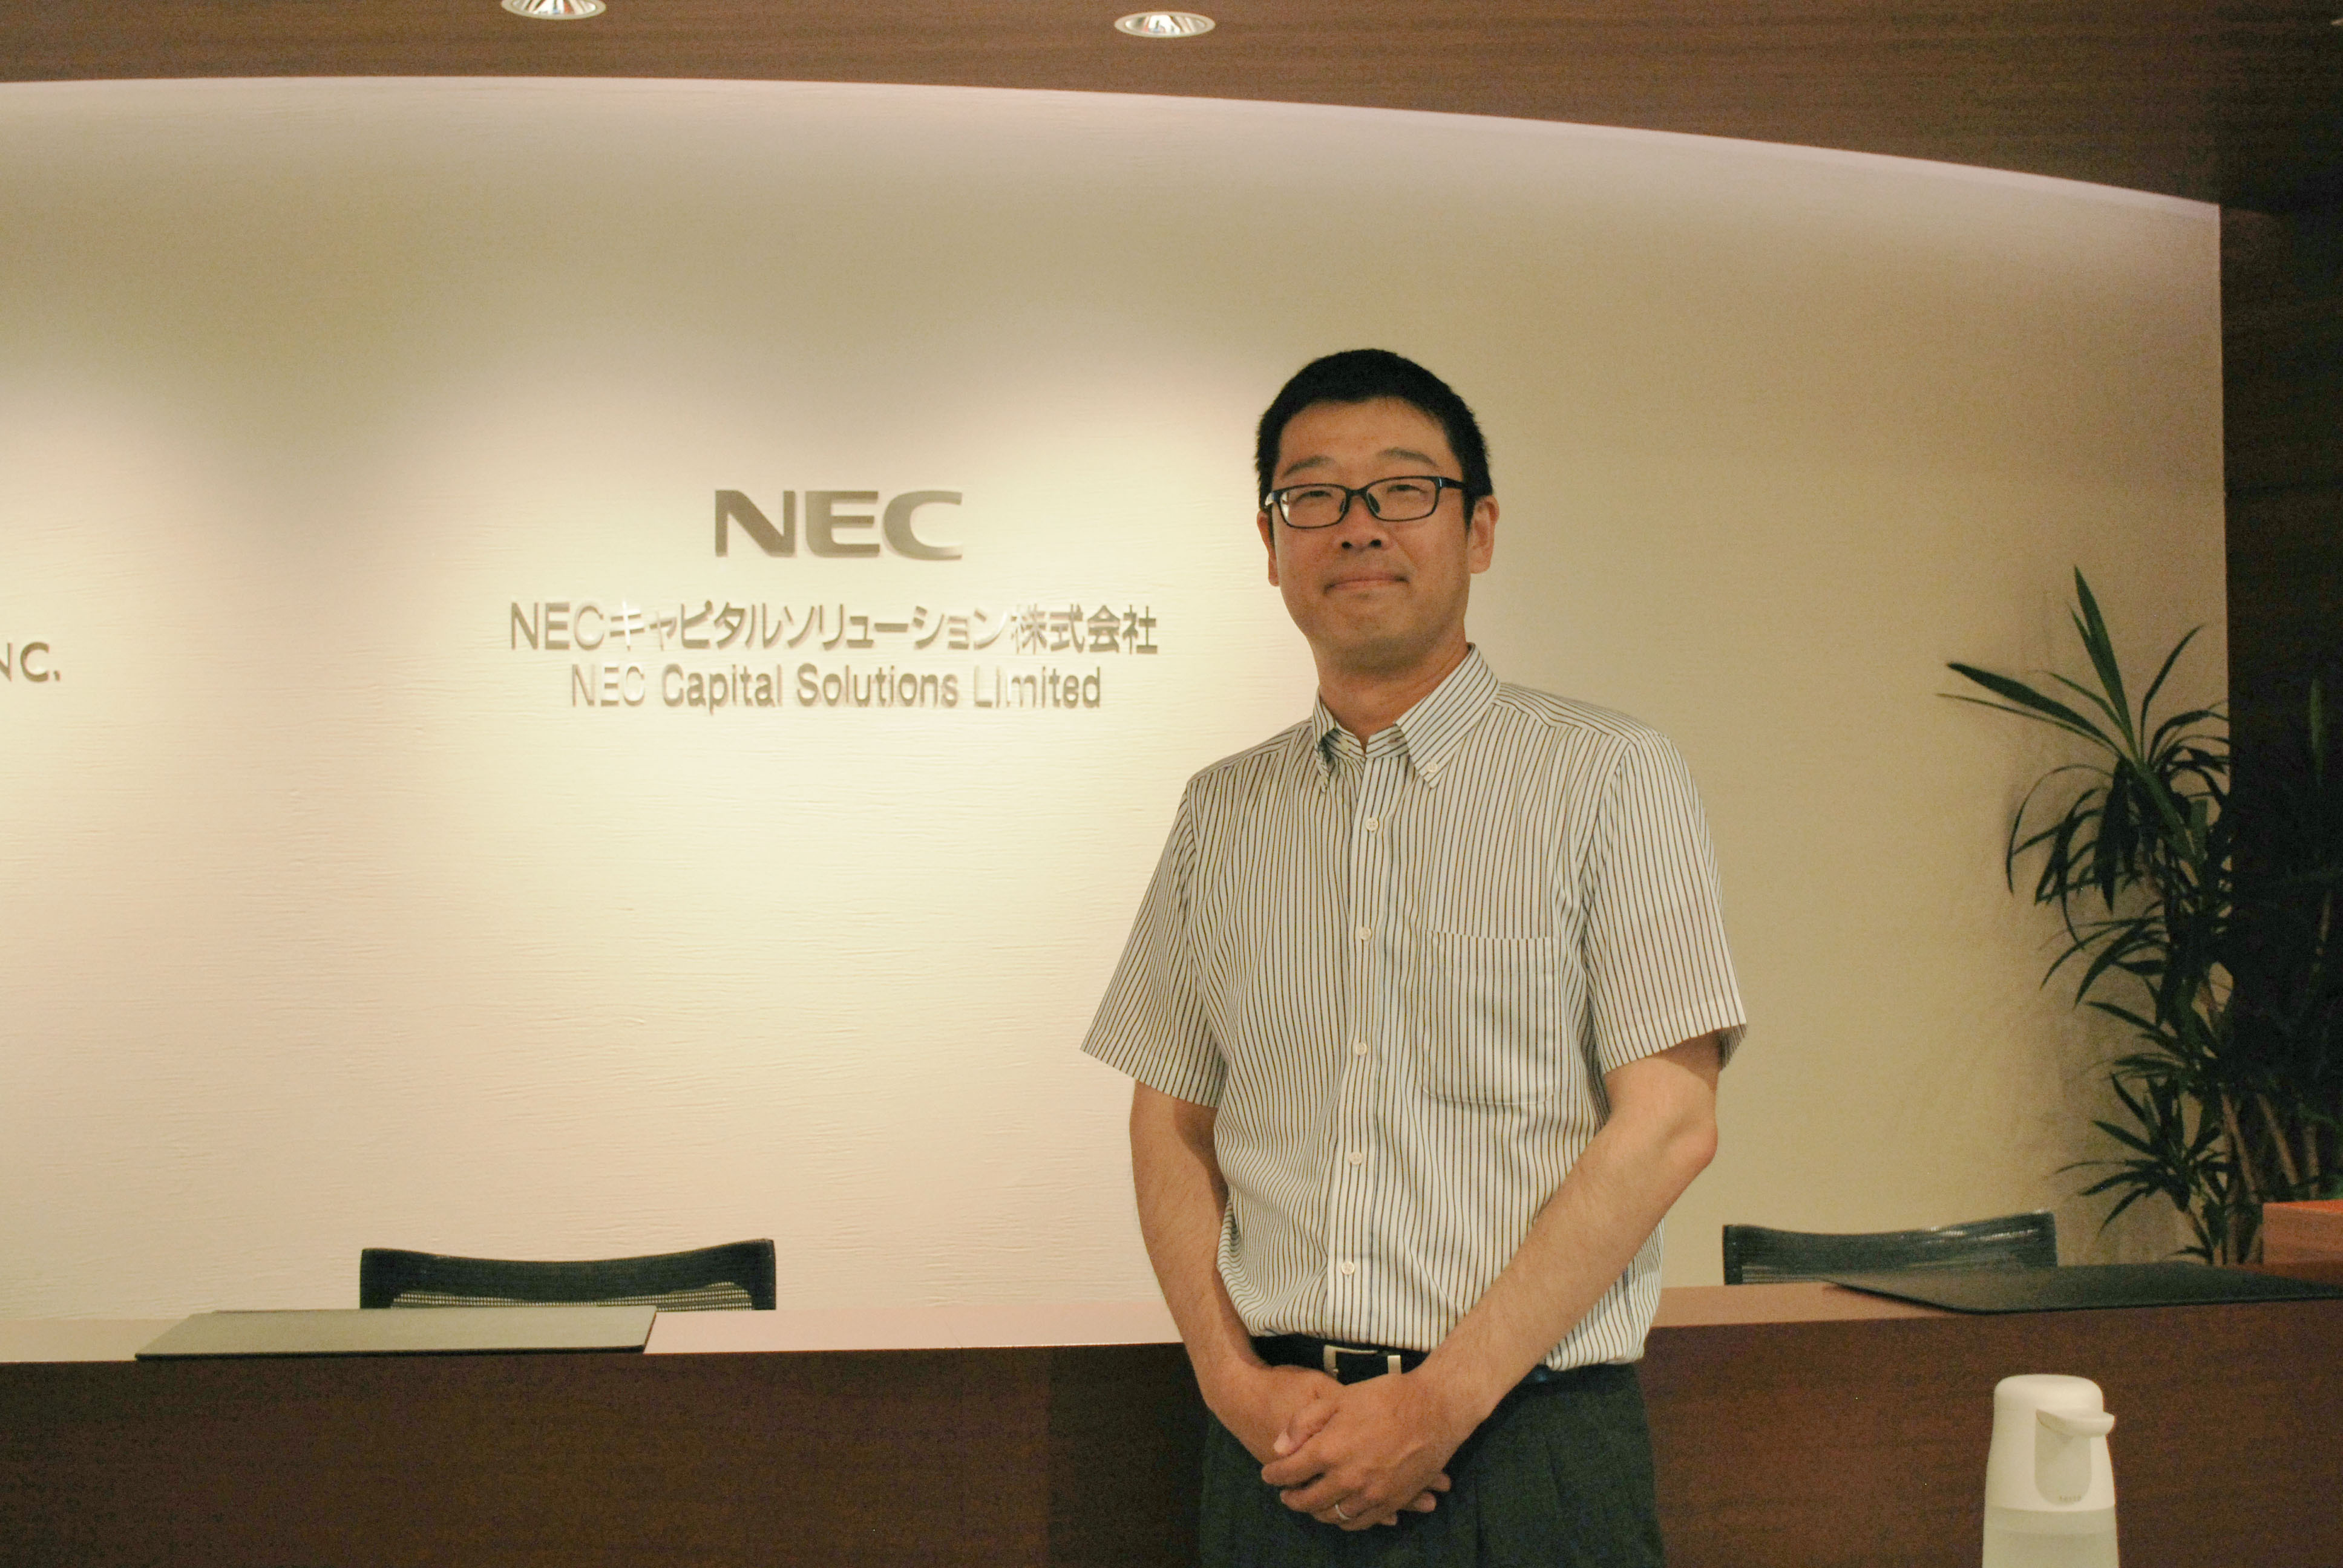 NECキャピタルソリューション株式会社様